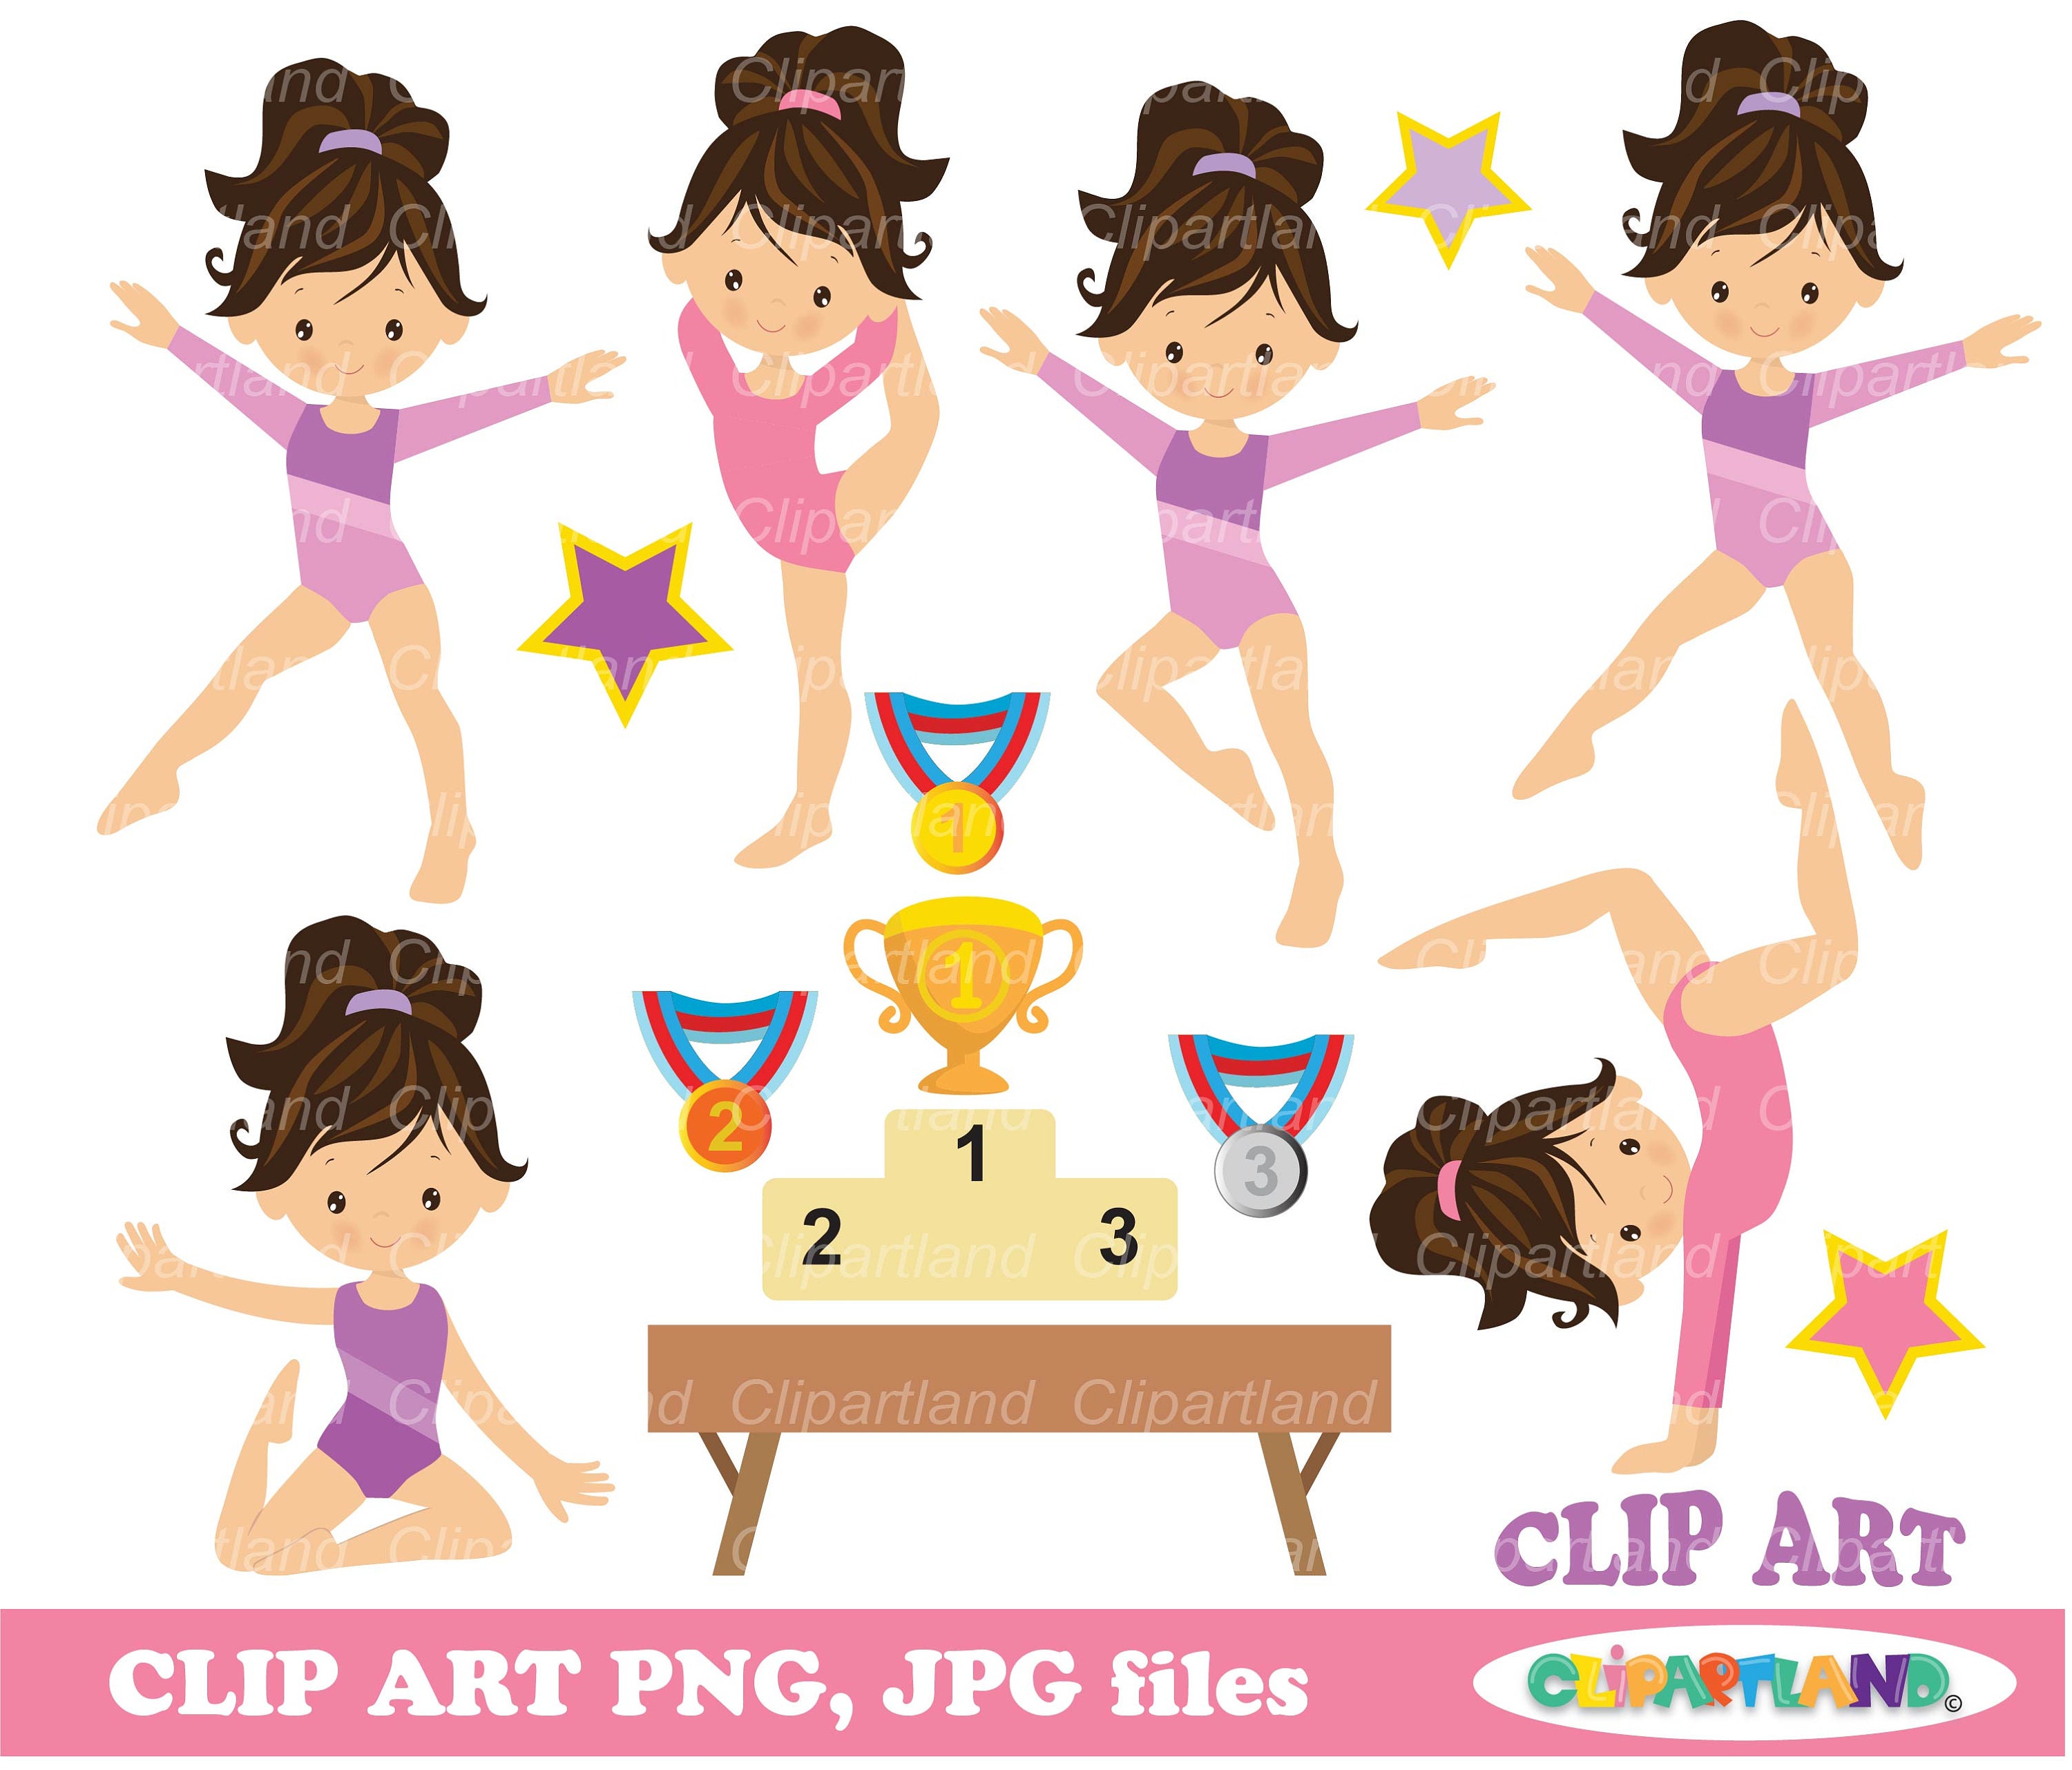 Top 5 Gymnastics Gifts for 9 Year Old Girl – GymnasticsHQ